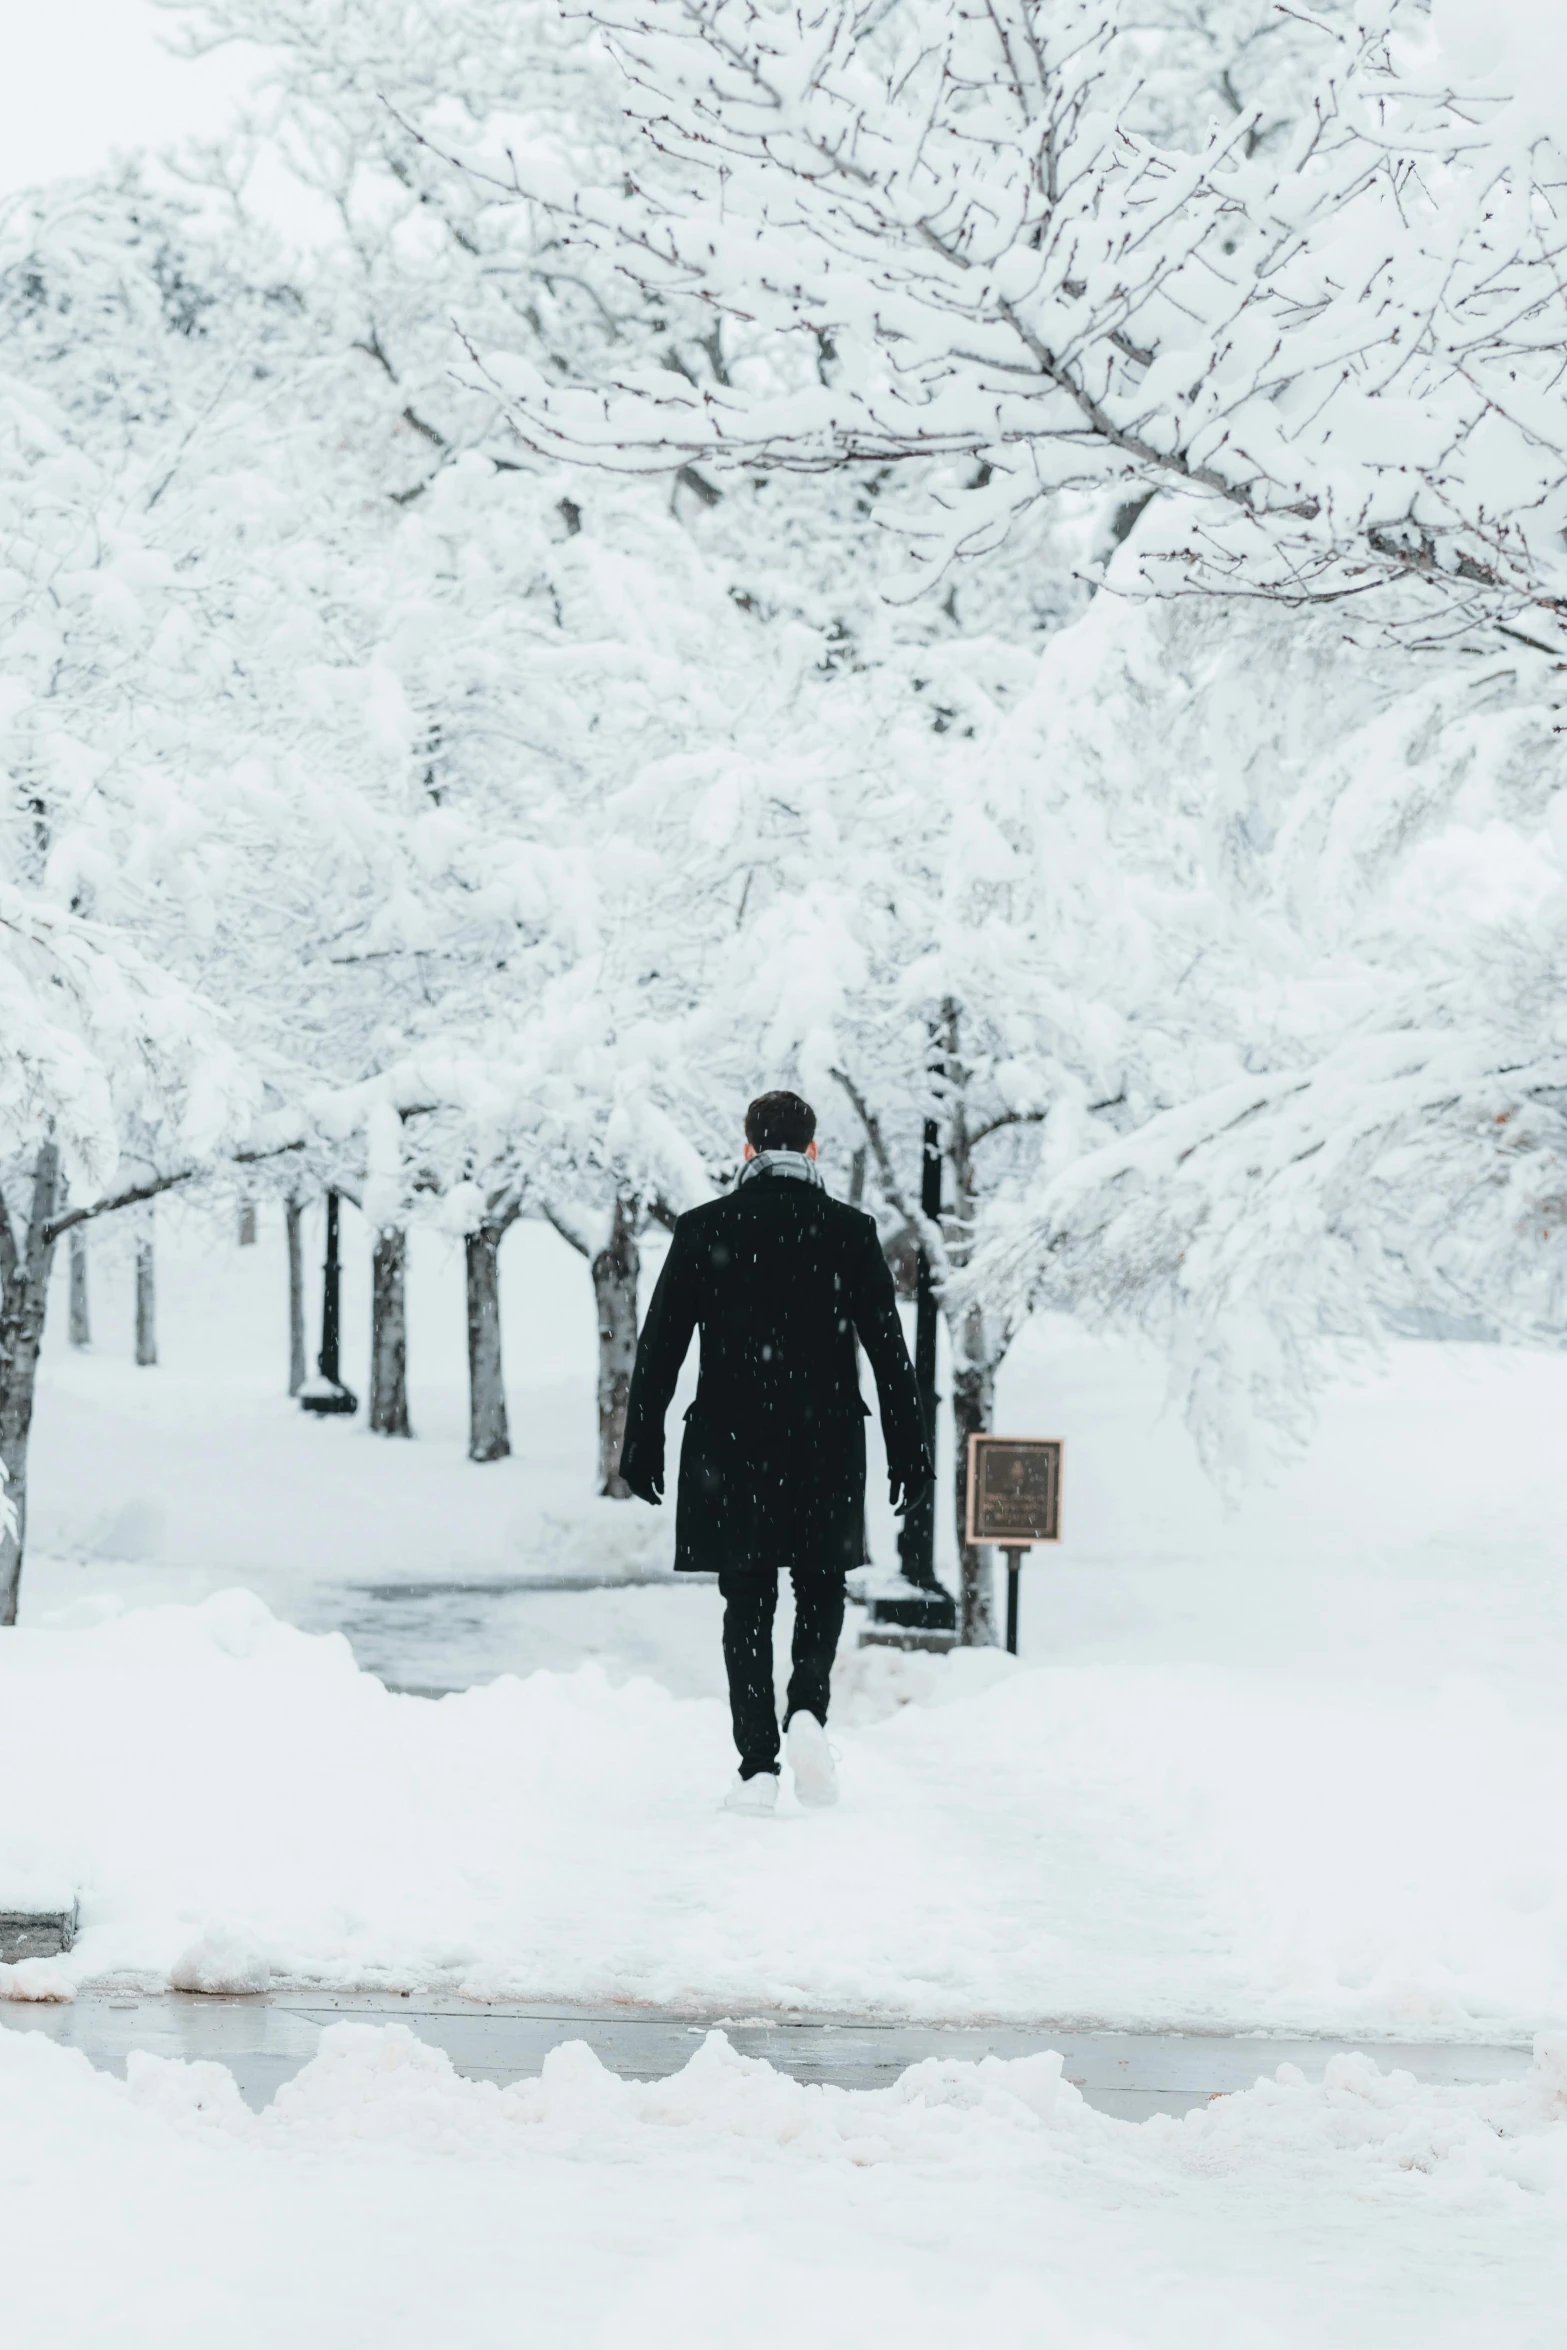 a man walking in deep snow near park benches